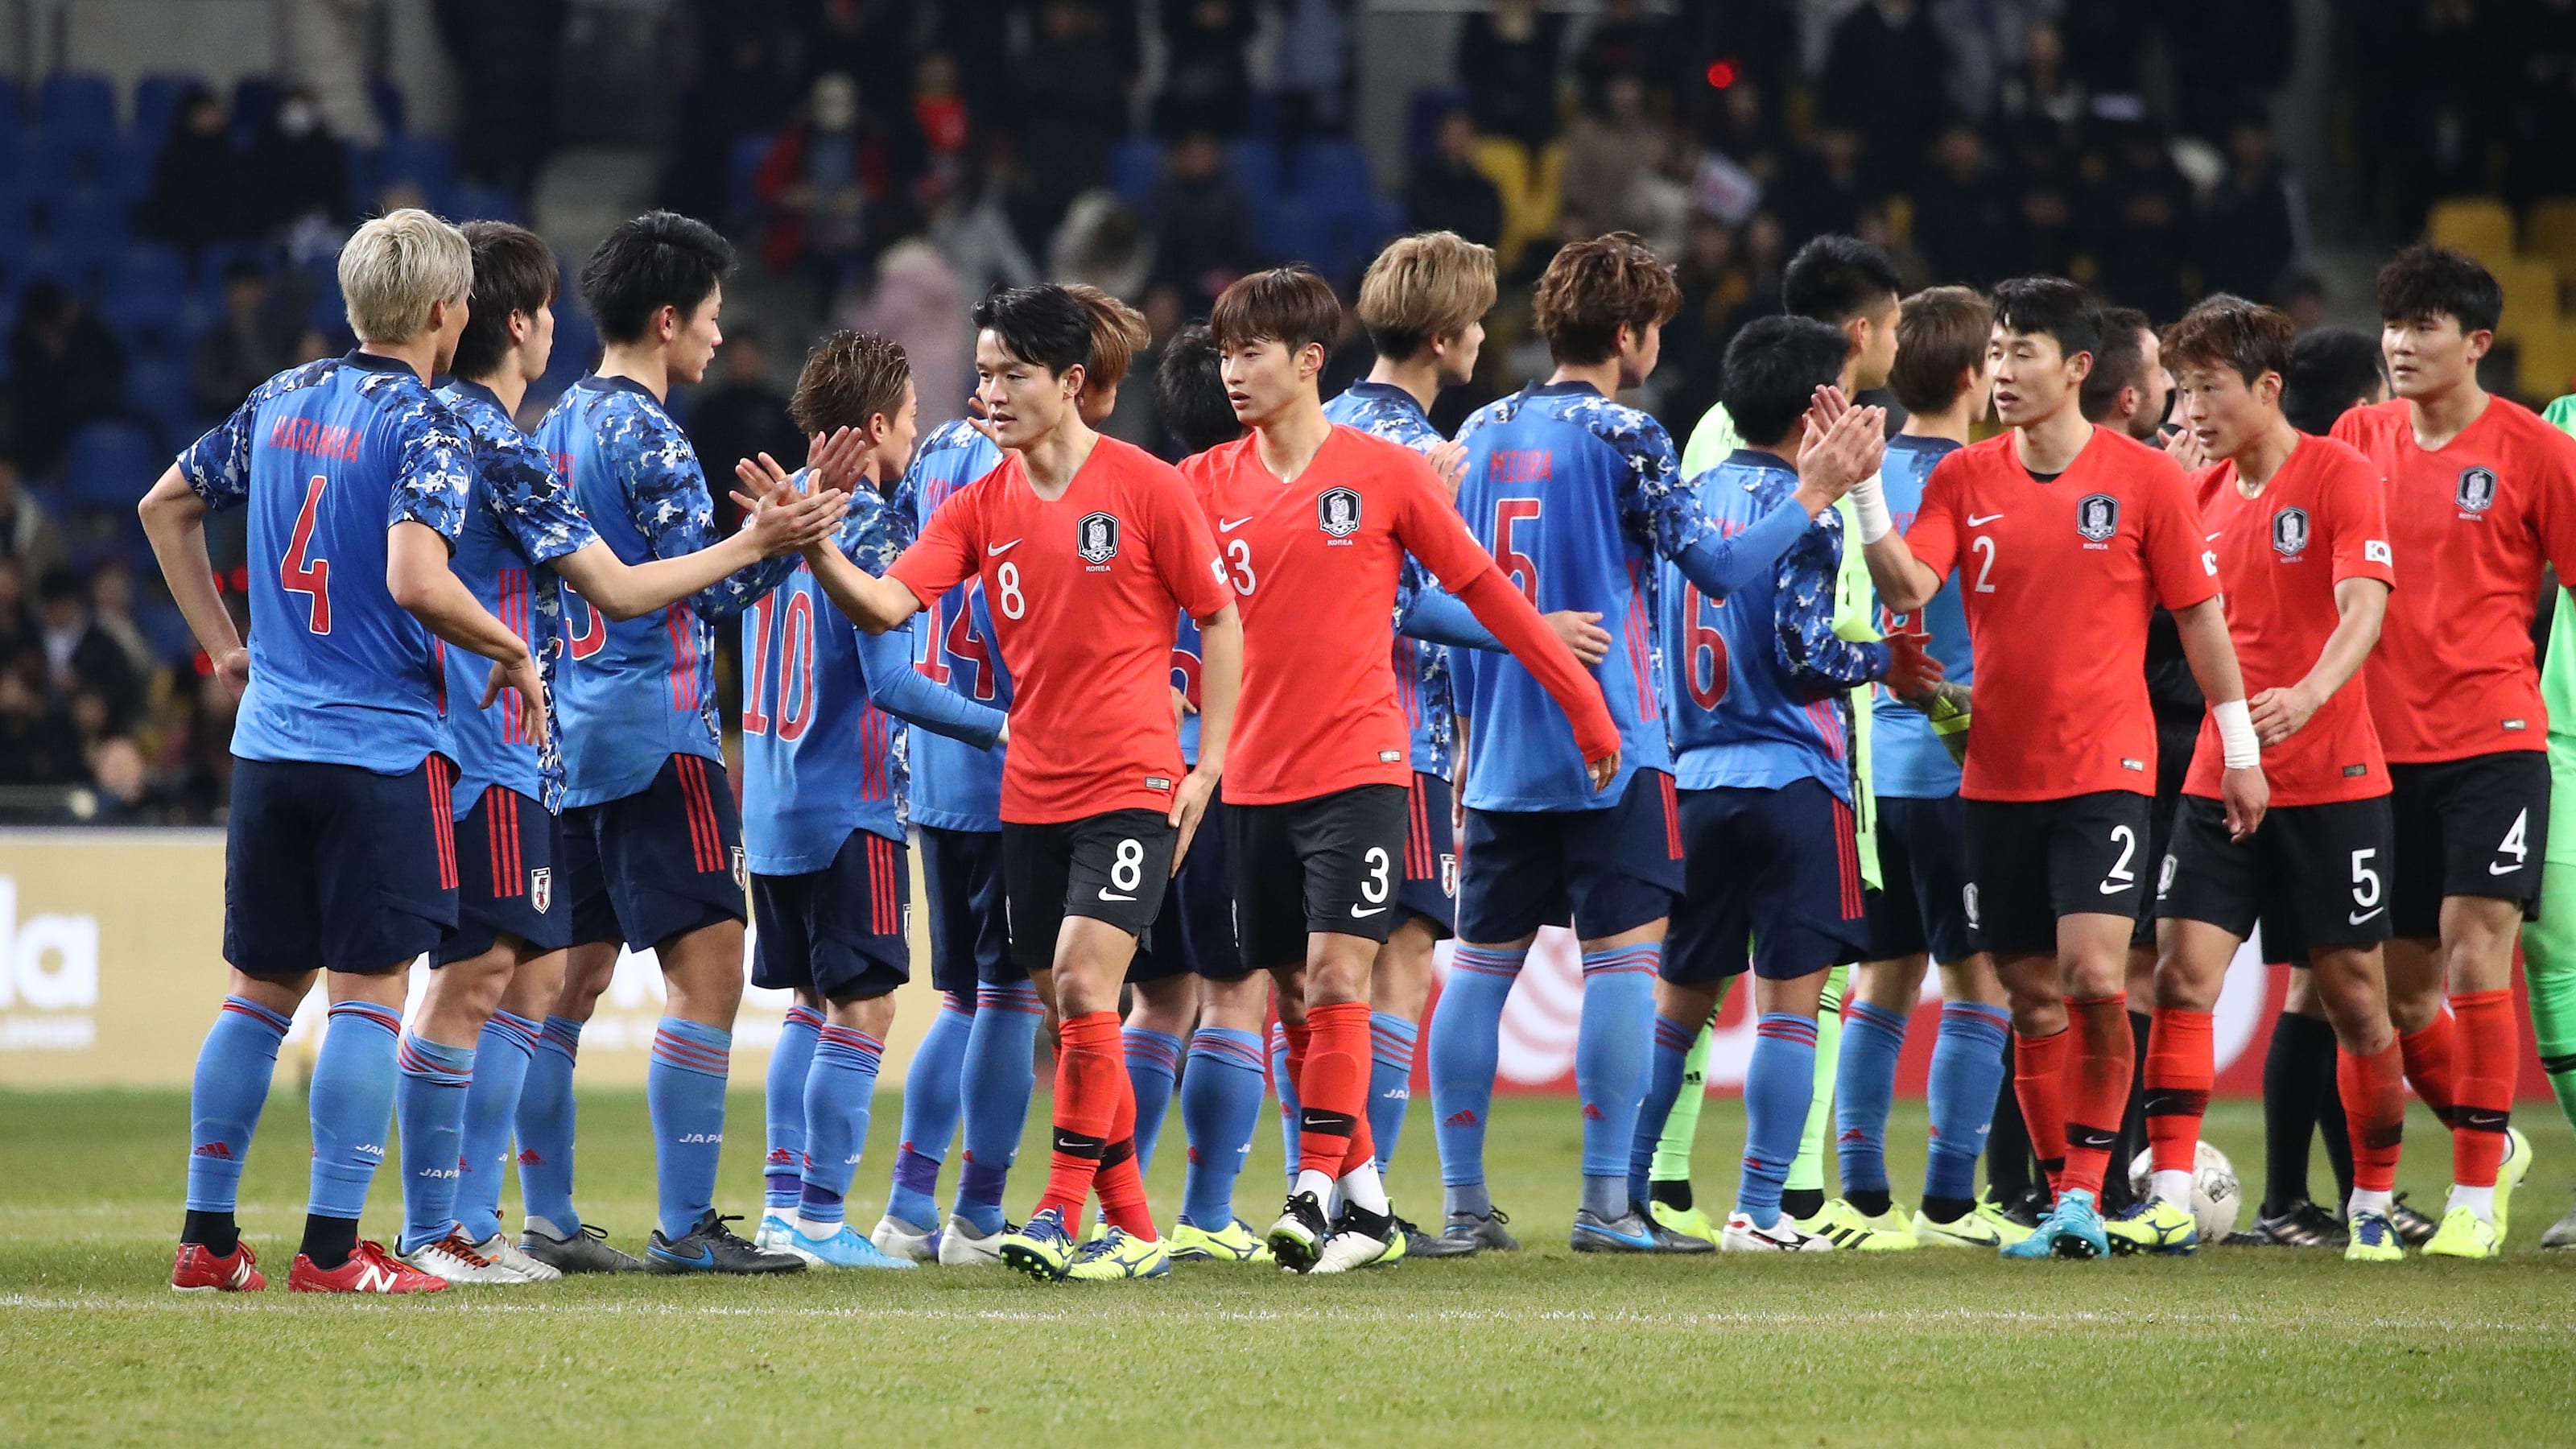 3月25日 サッカー国際親善試合 日本vs韓国の日程 放送予定 日本代表21年初戦